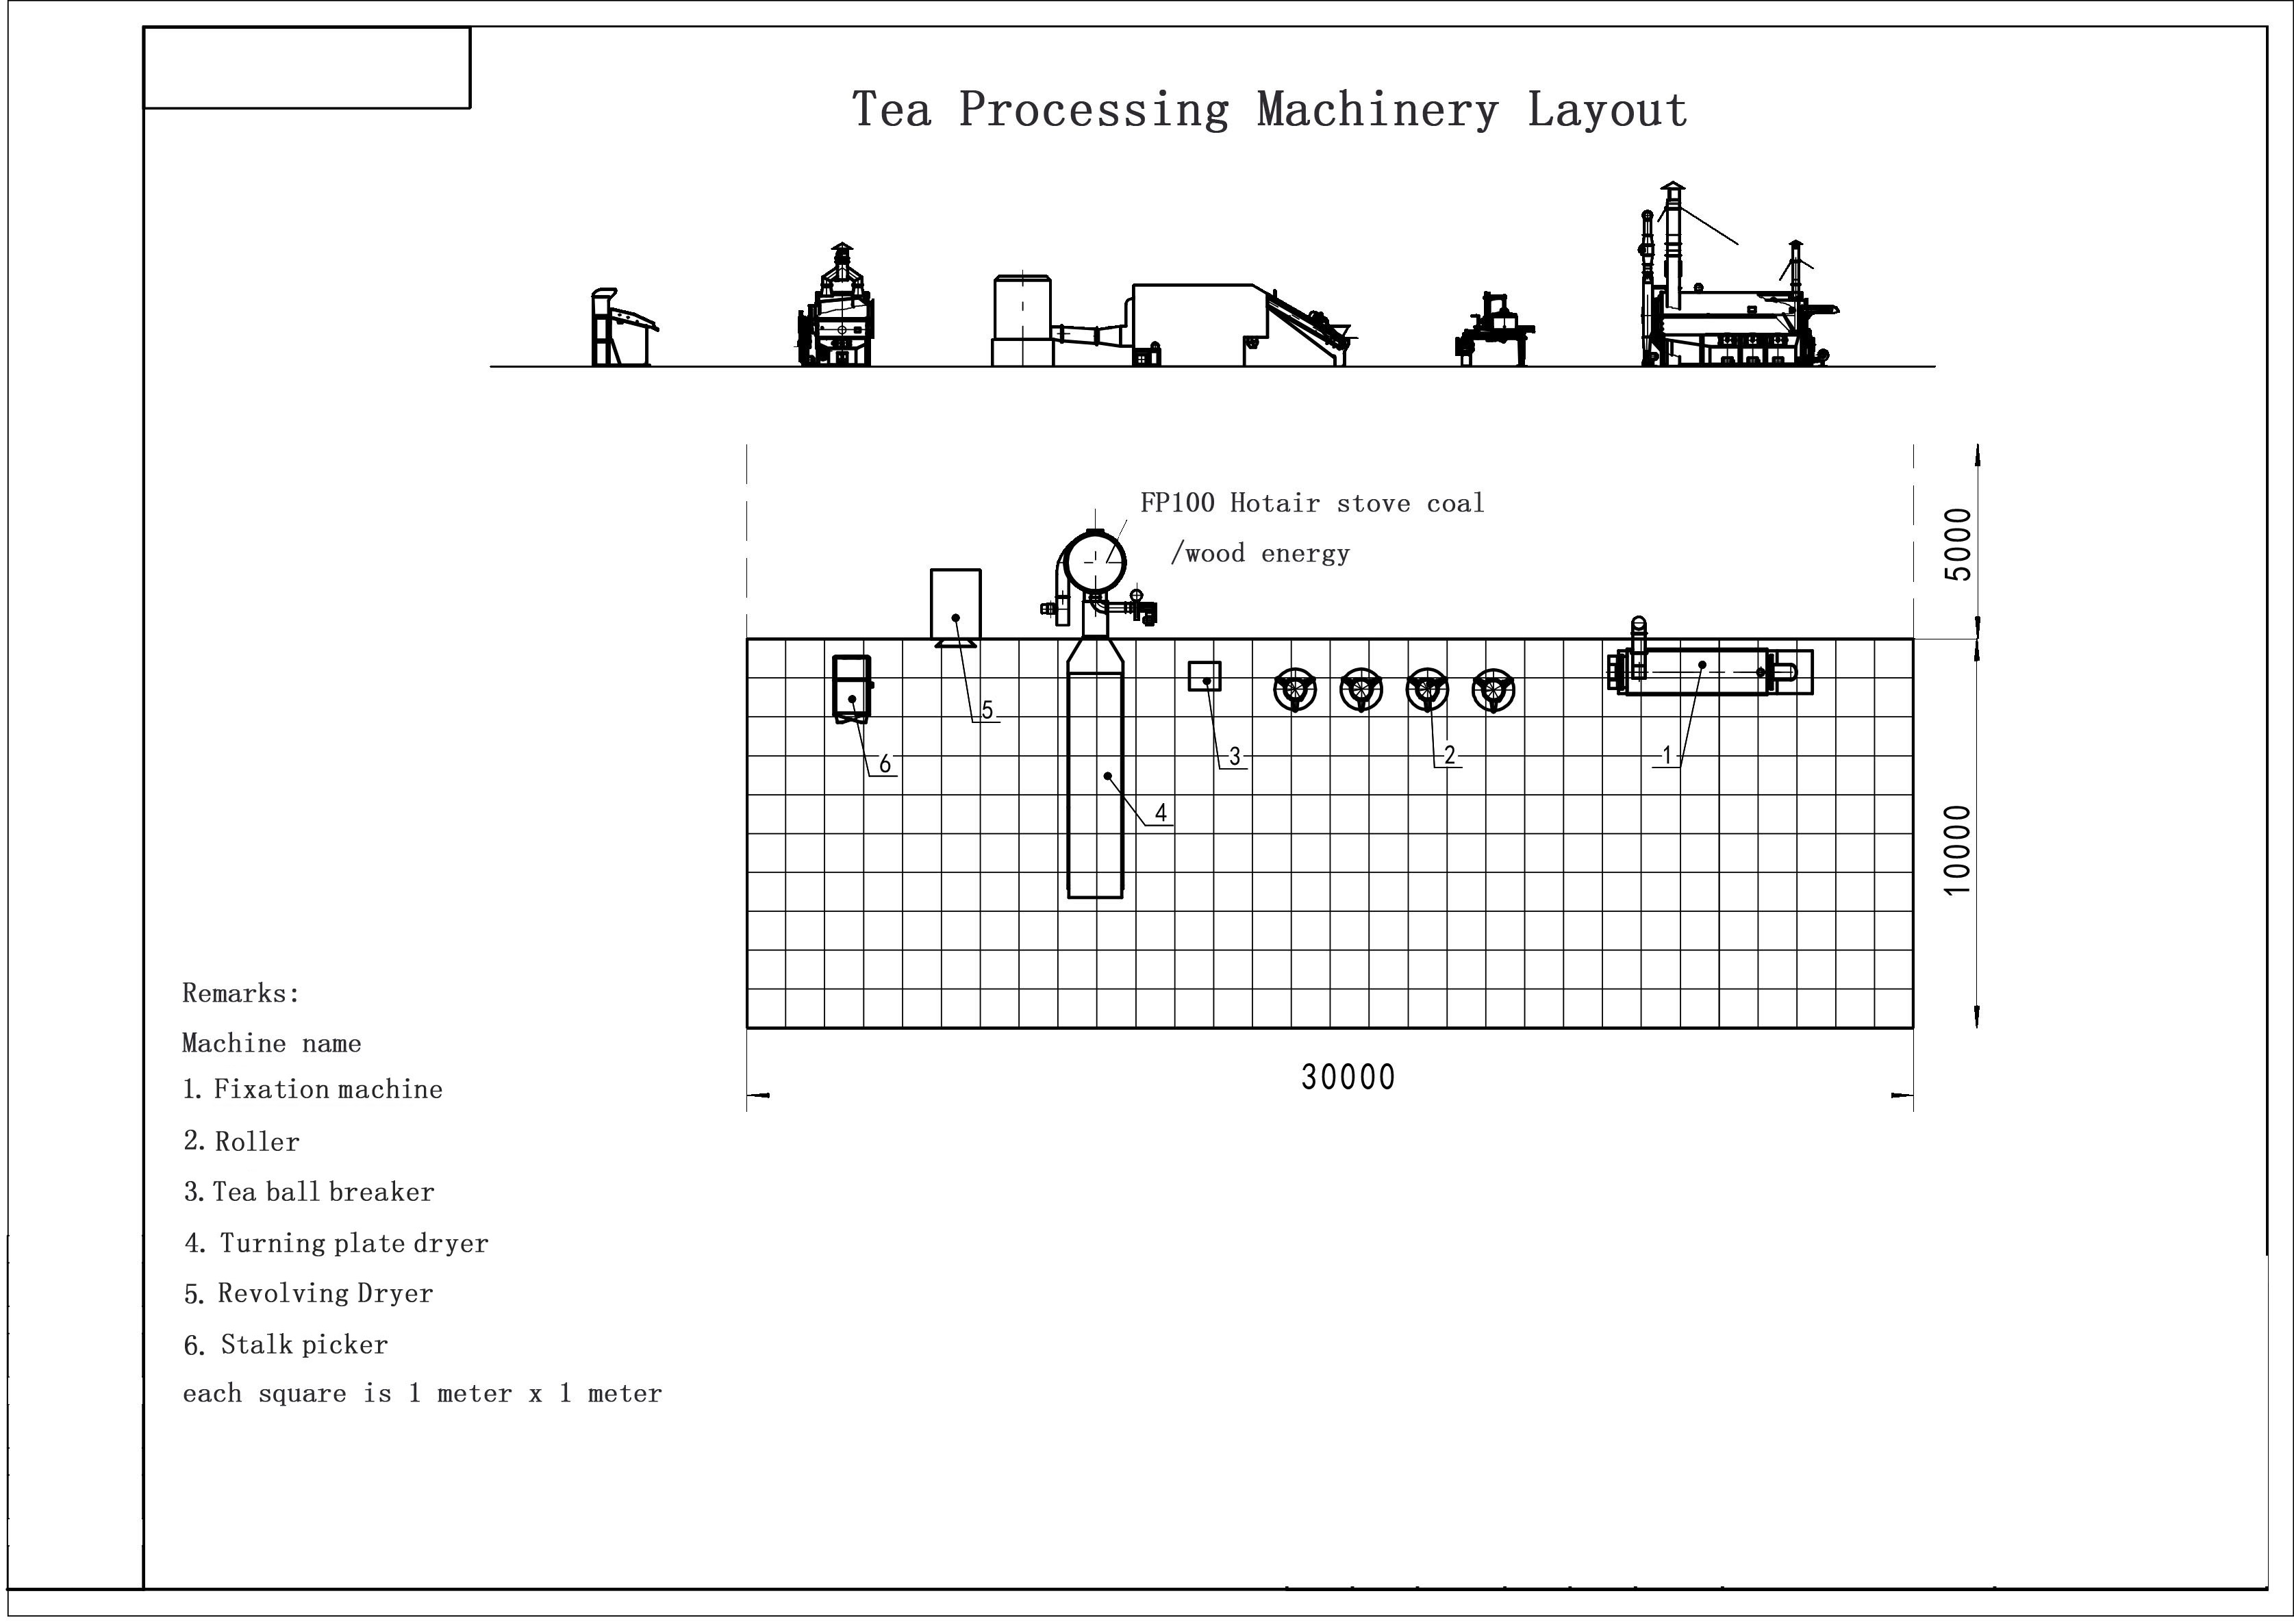 Tea processing machinery layout.jpg